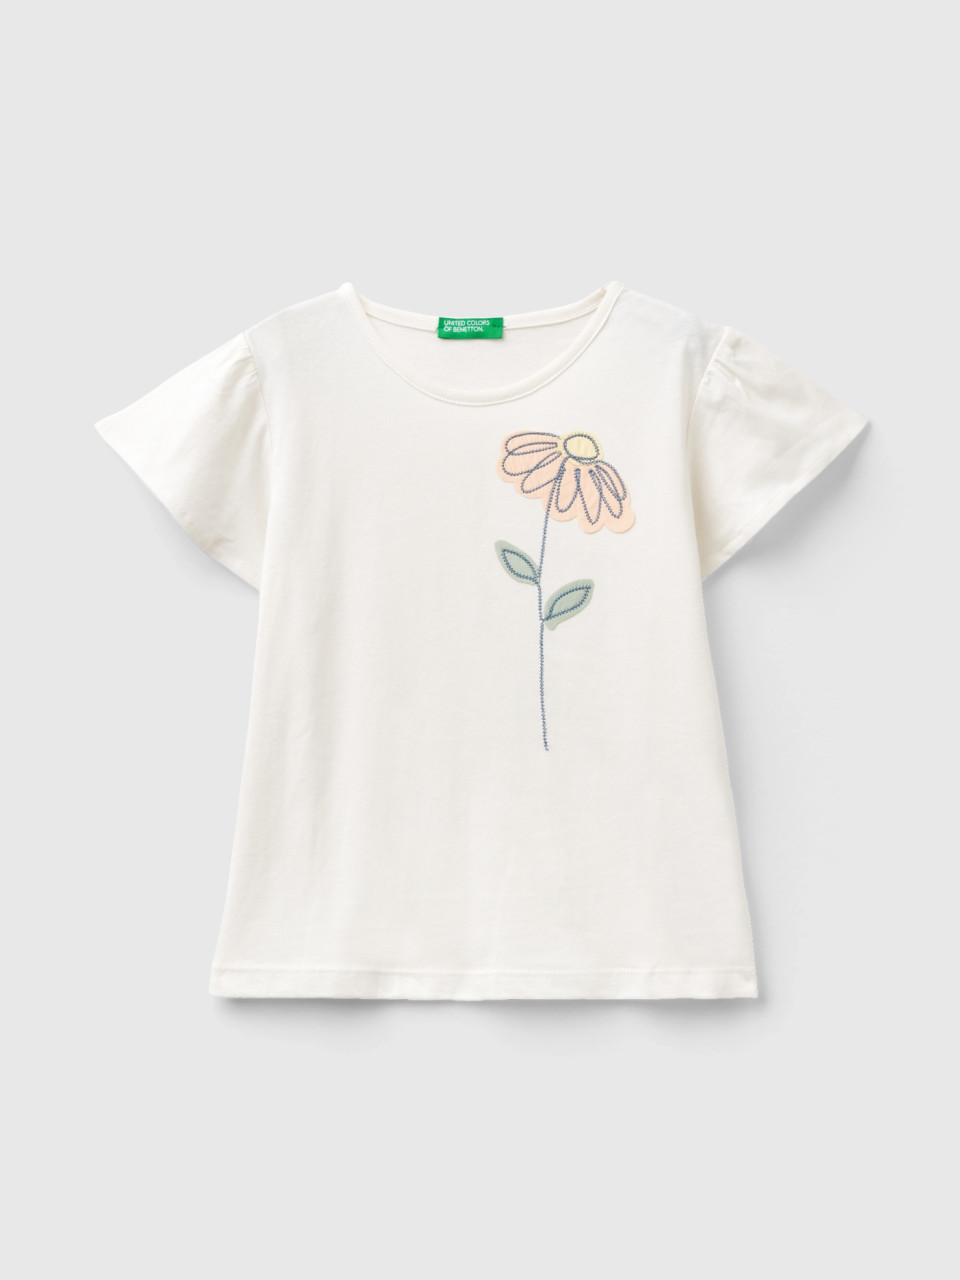 Benetton, Camiseta Con Bordado Floral, Blanco Crema, Niños